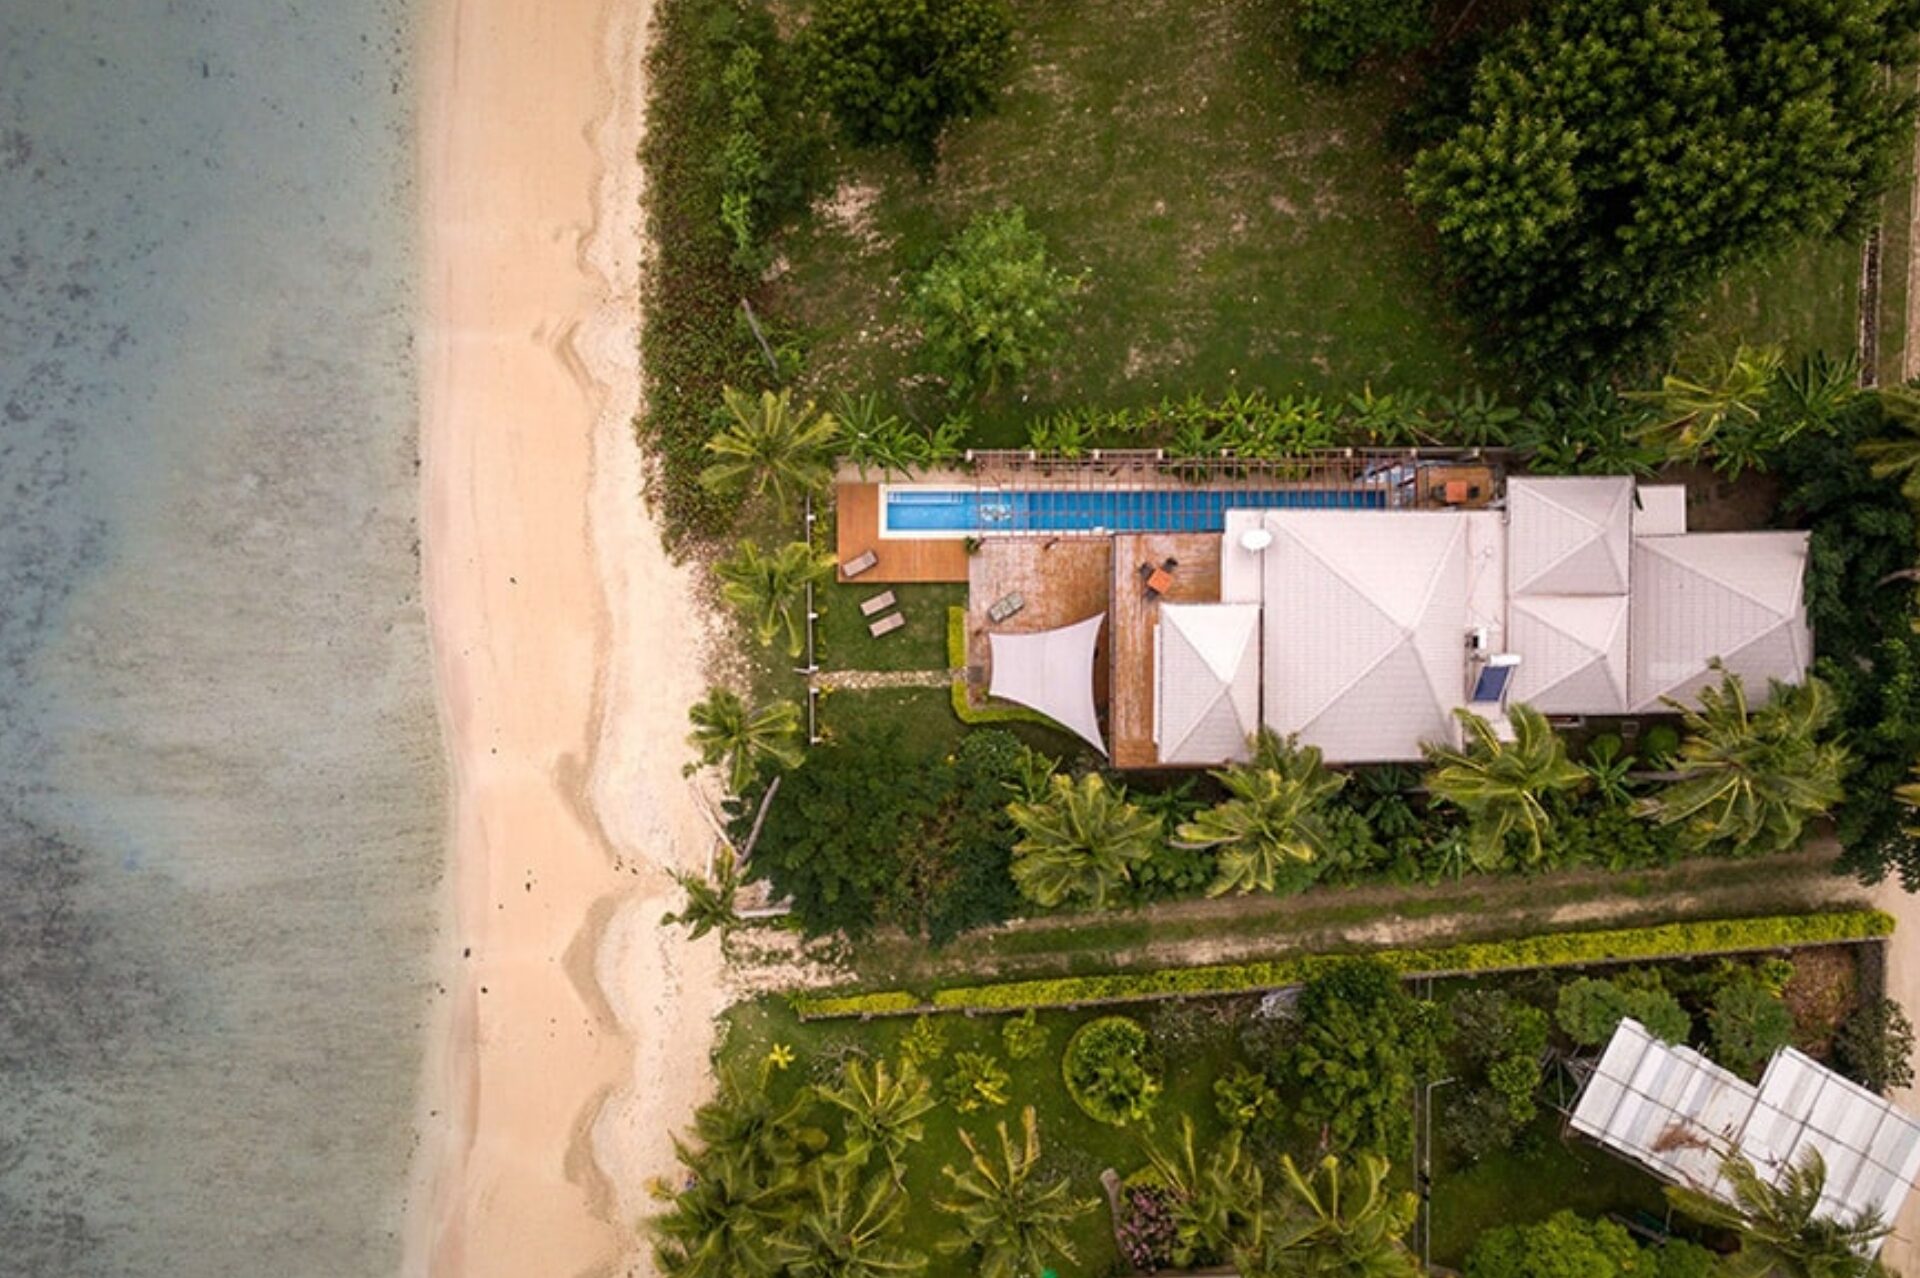 First Landing Beach Resort Villas in Fiji for Tropical Experiences